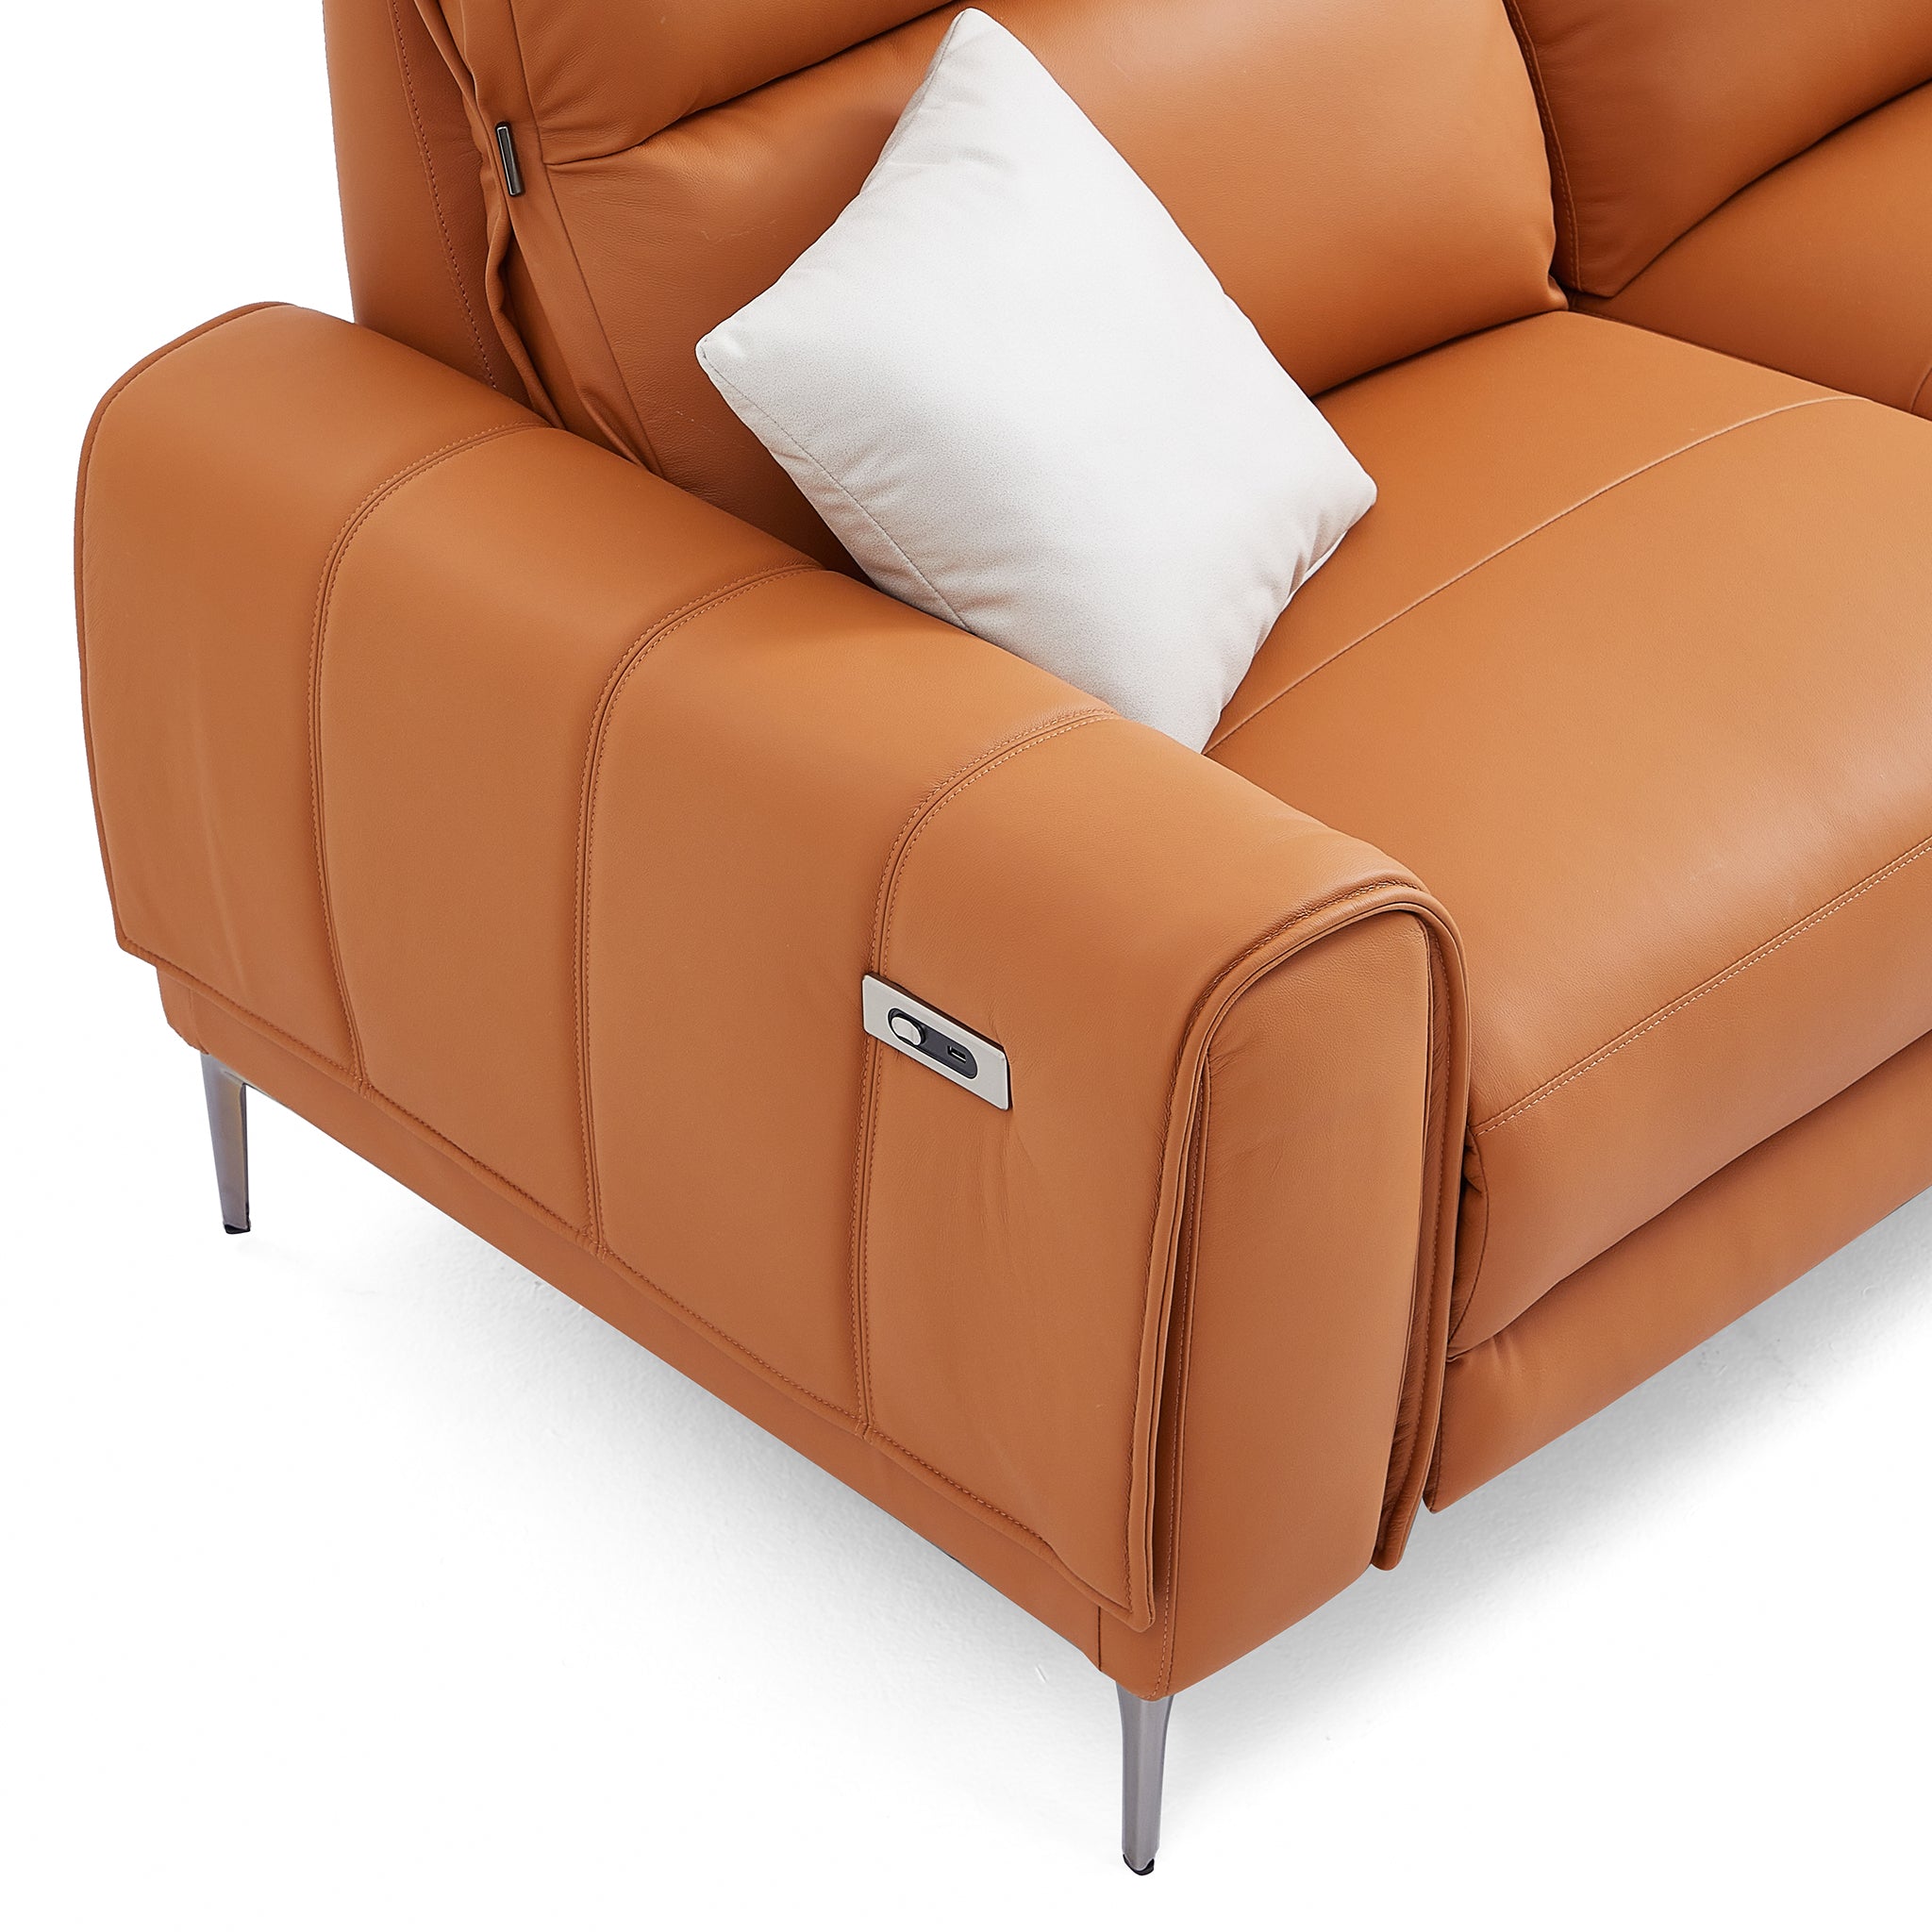 Louis Leather Power Recliner Sleeper Sofa